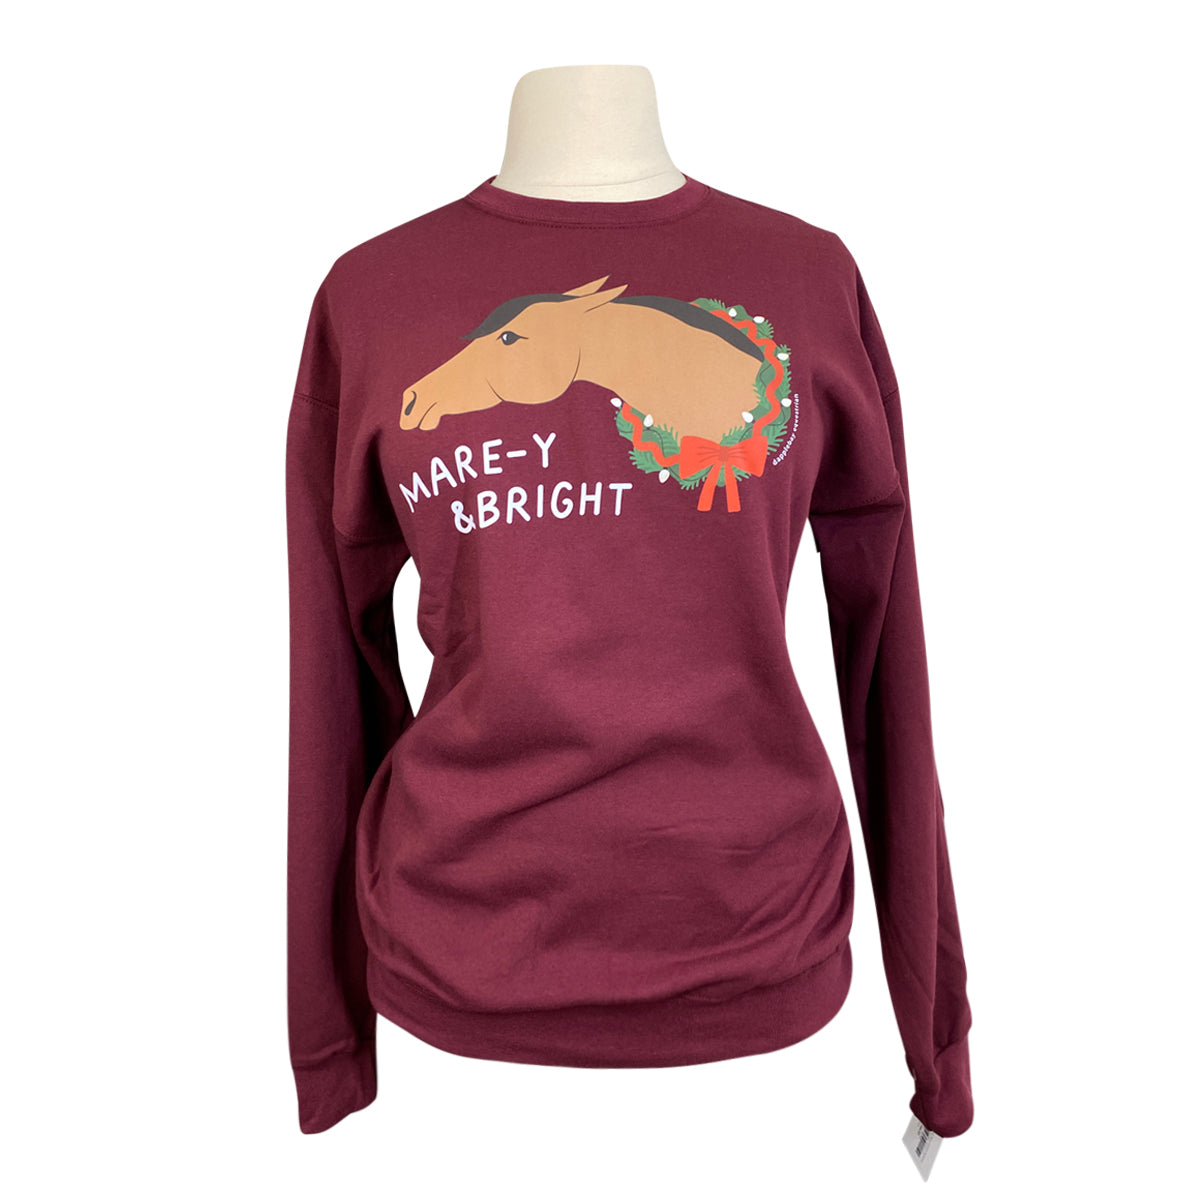 Dapplebay 'Mare-y & Bright' Sweatshirt in Mulled Wine/Bay